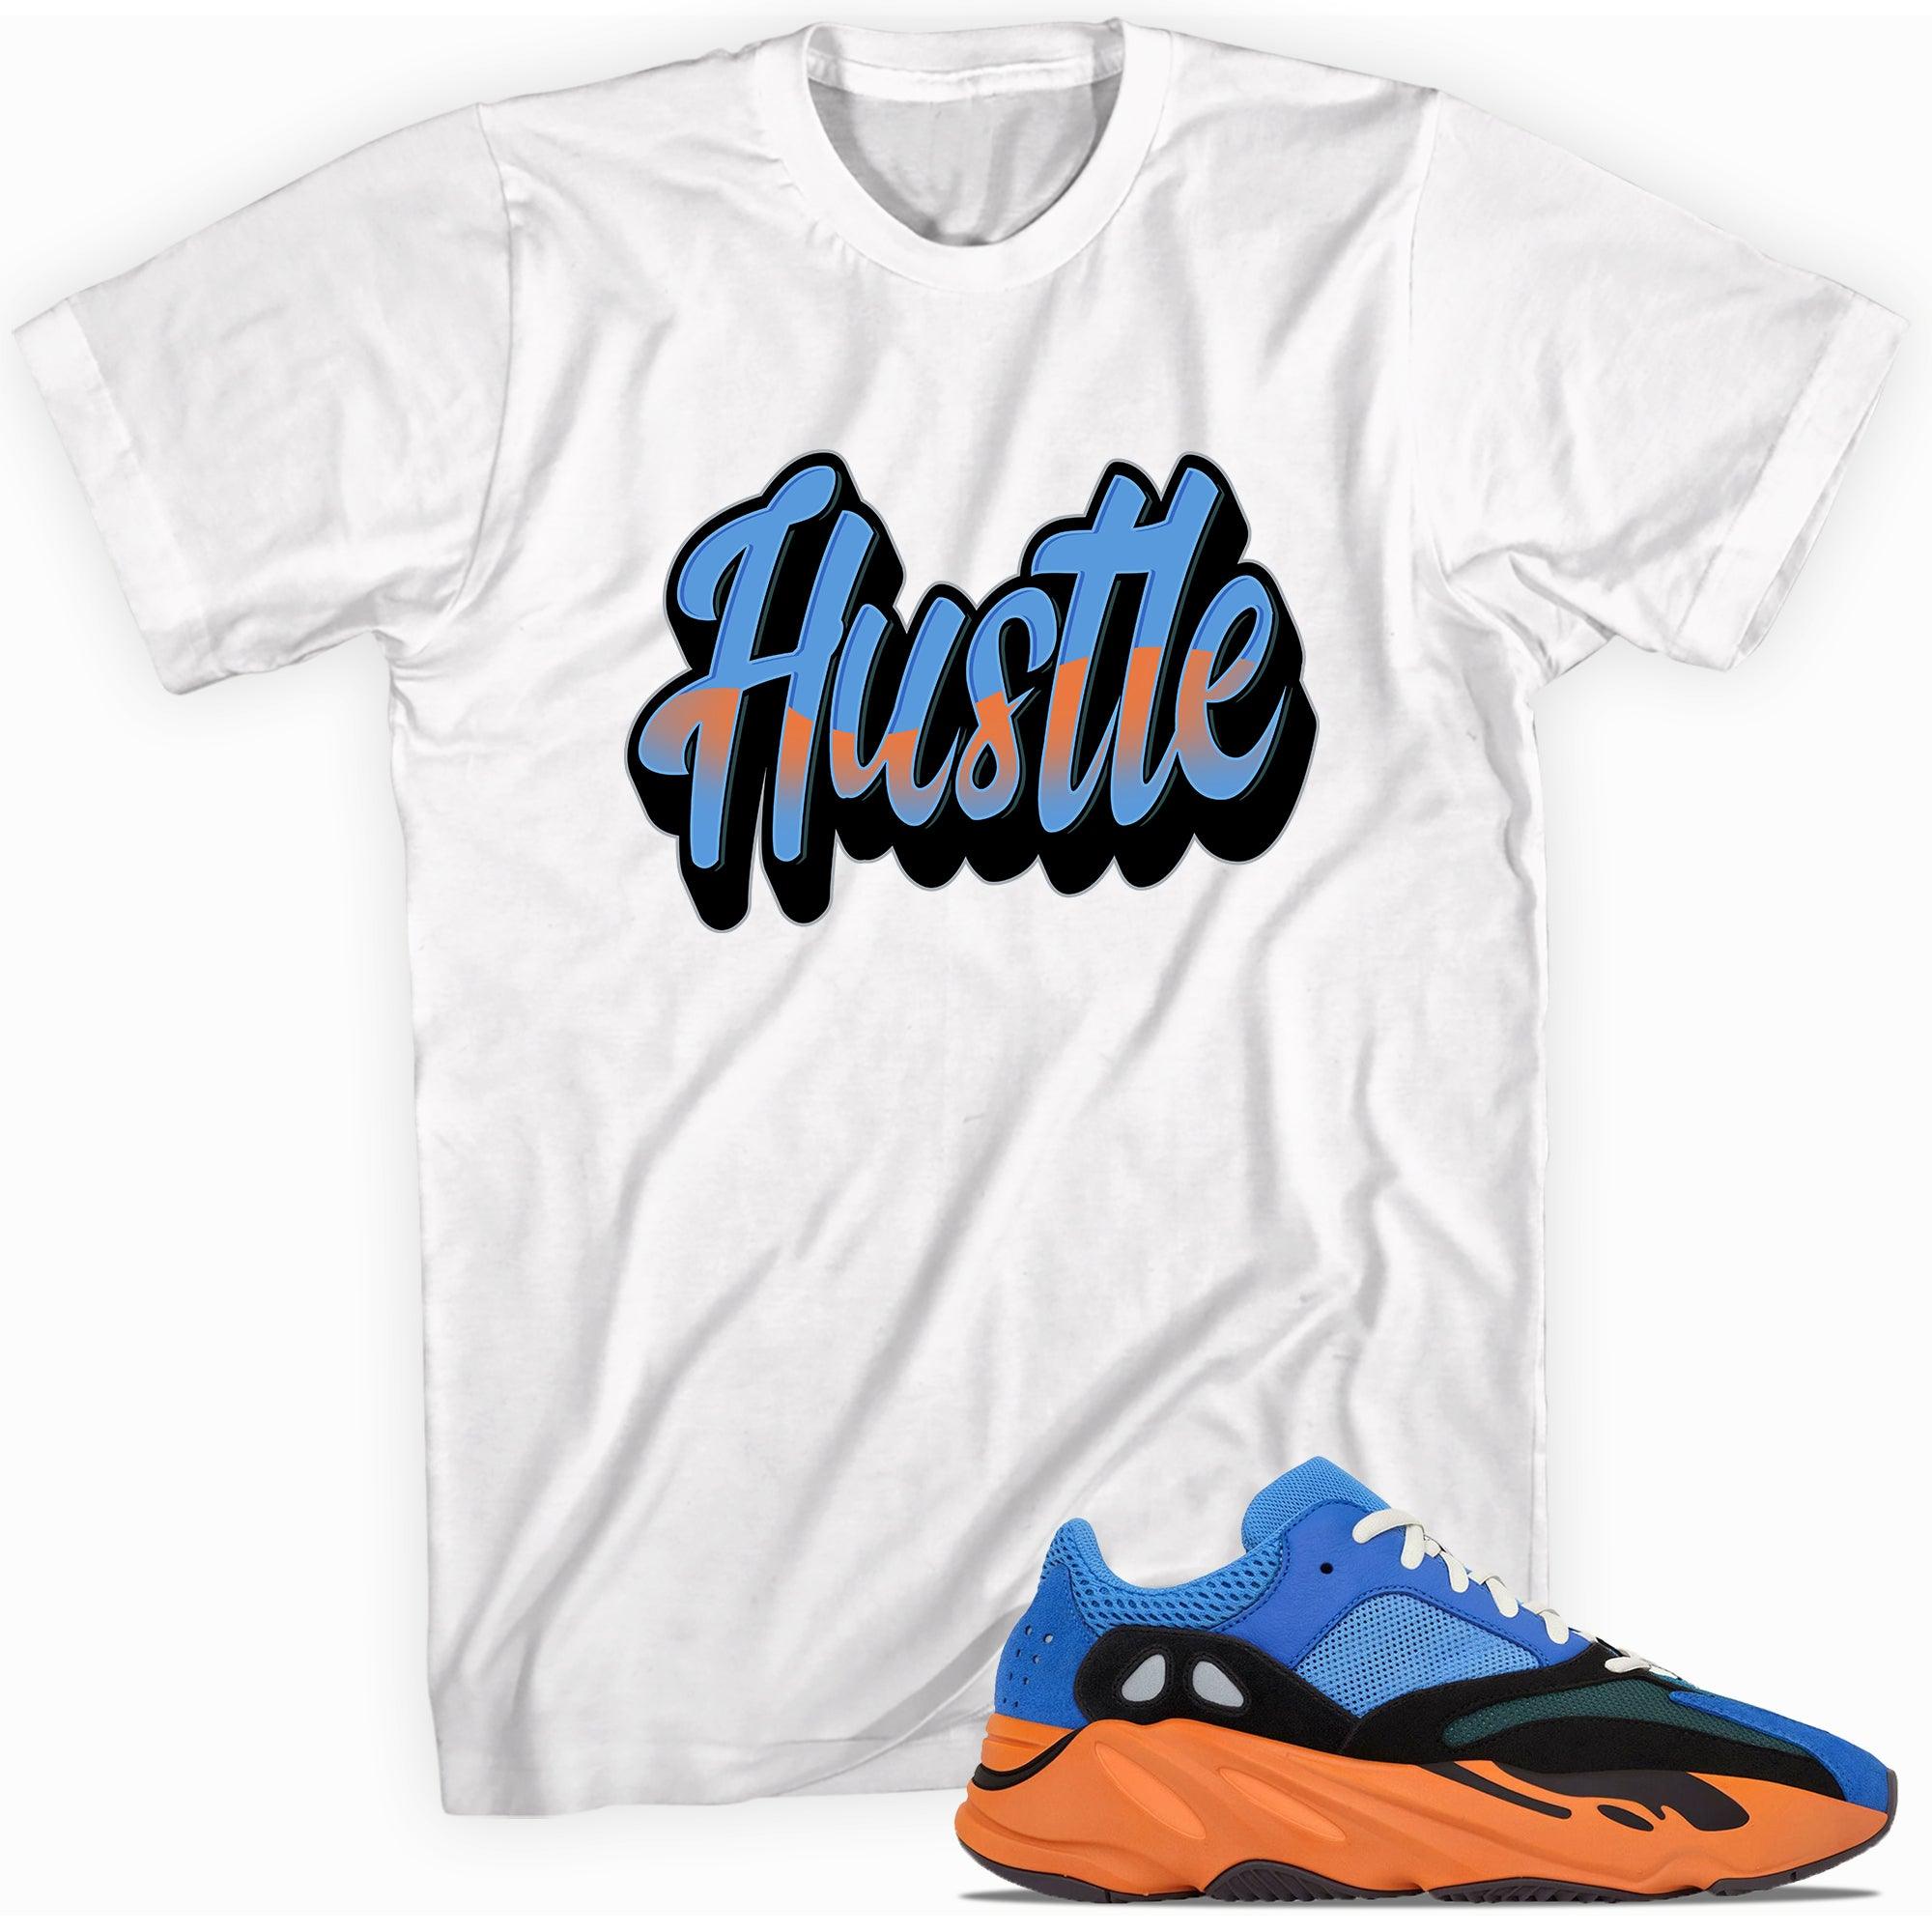 Hustle Shirt Yeezy Boost 700s Bright Blue photo